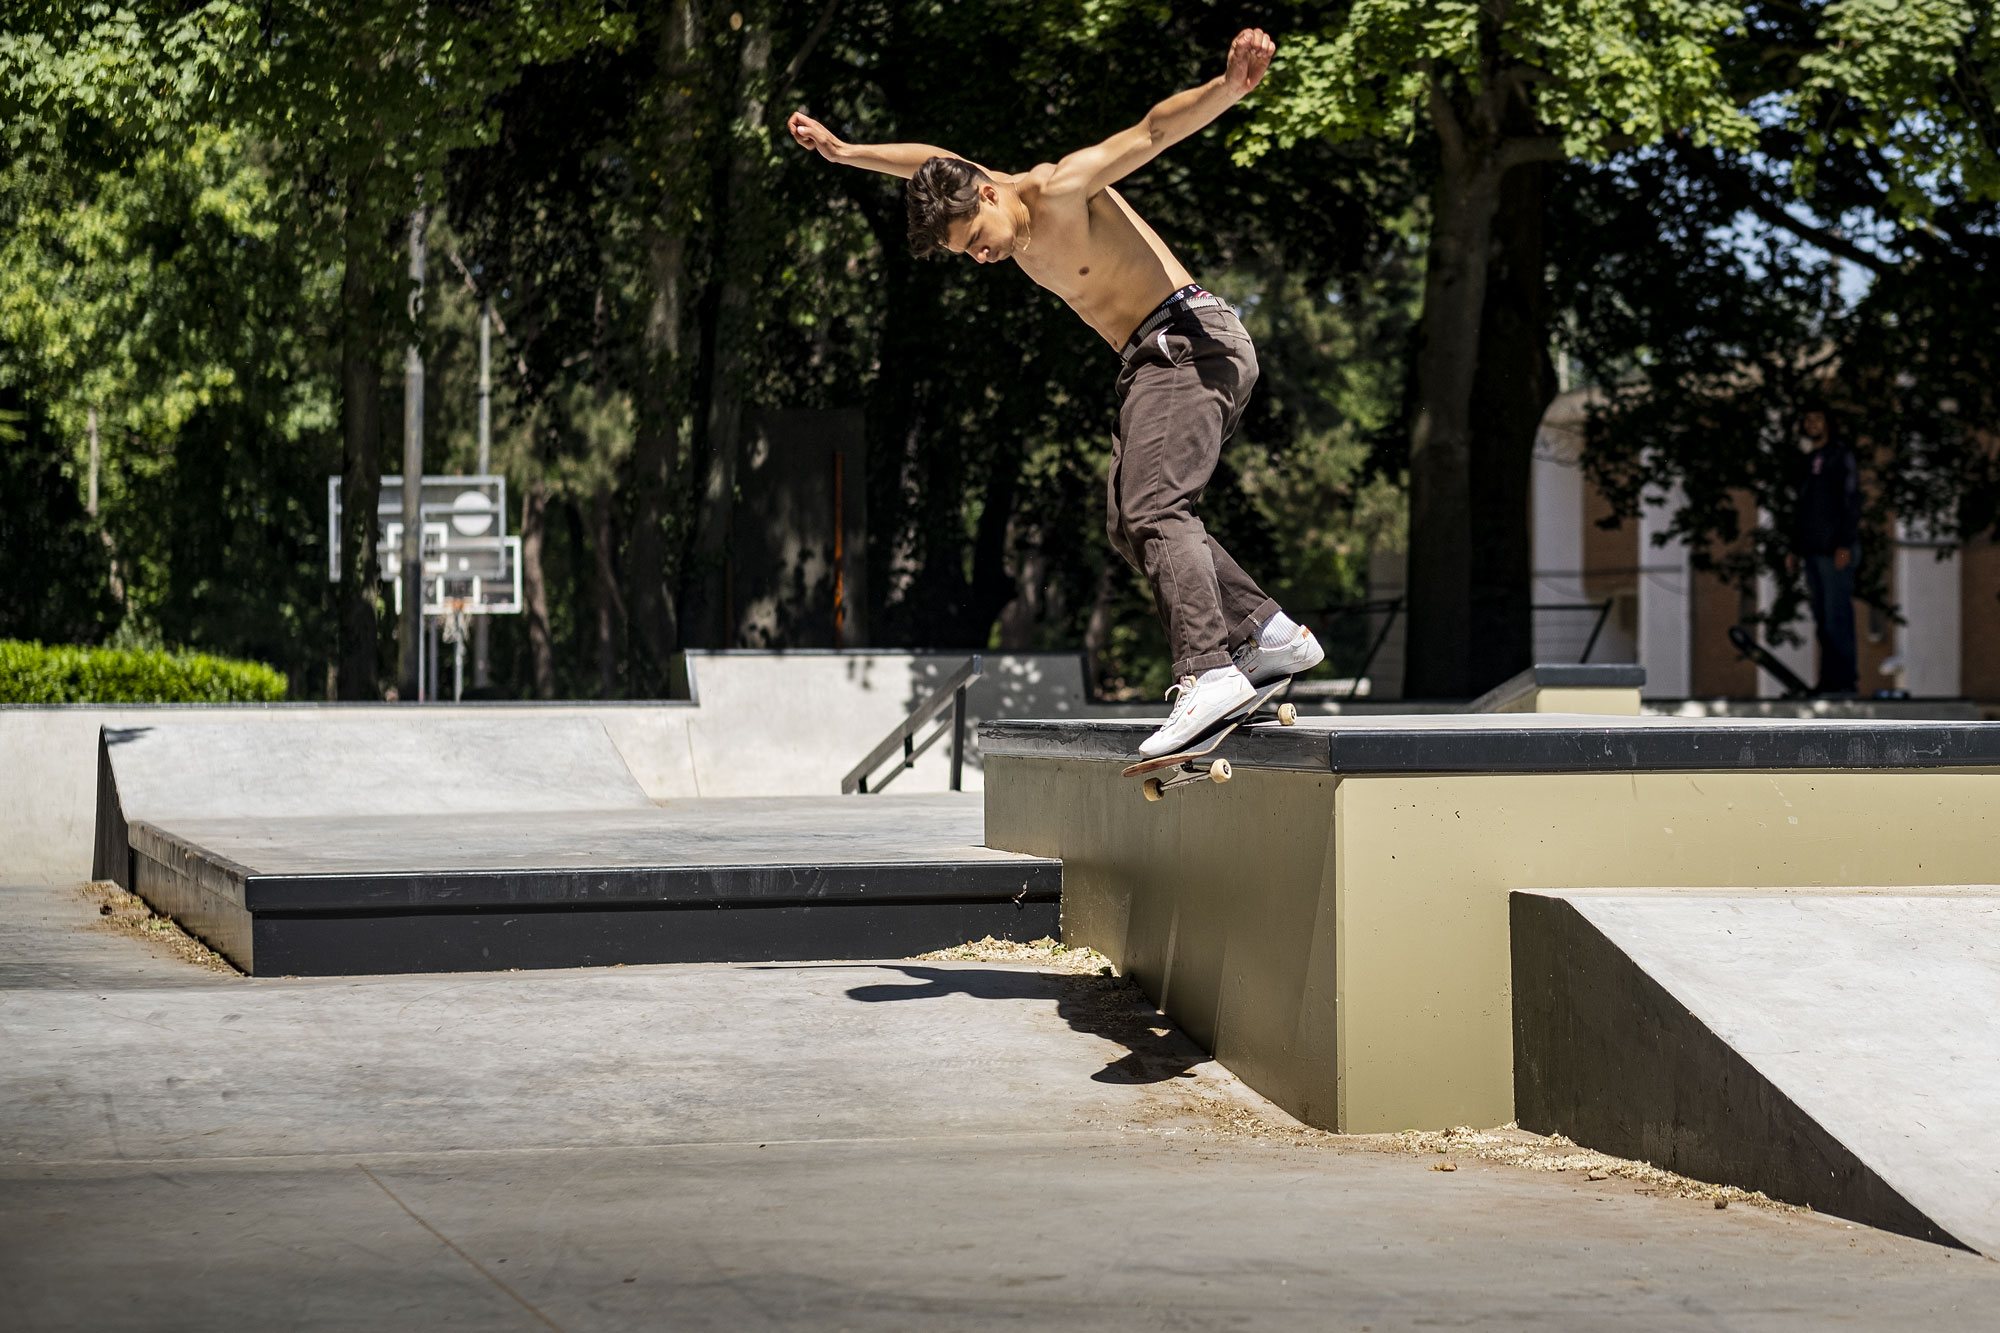 Back Smith by Jay de Keijzer at Skatepark Diest Photo by Mathijs Tromp